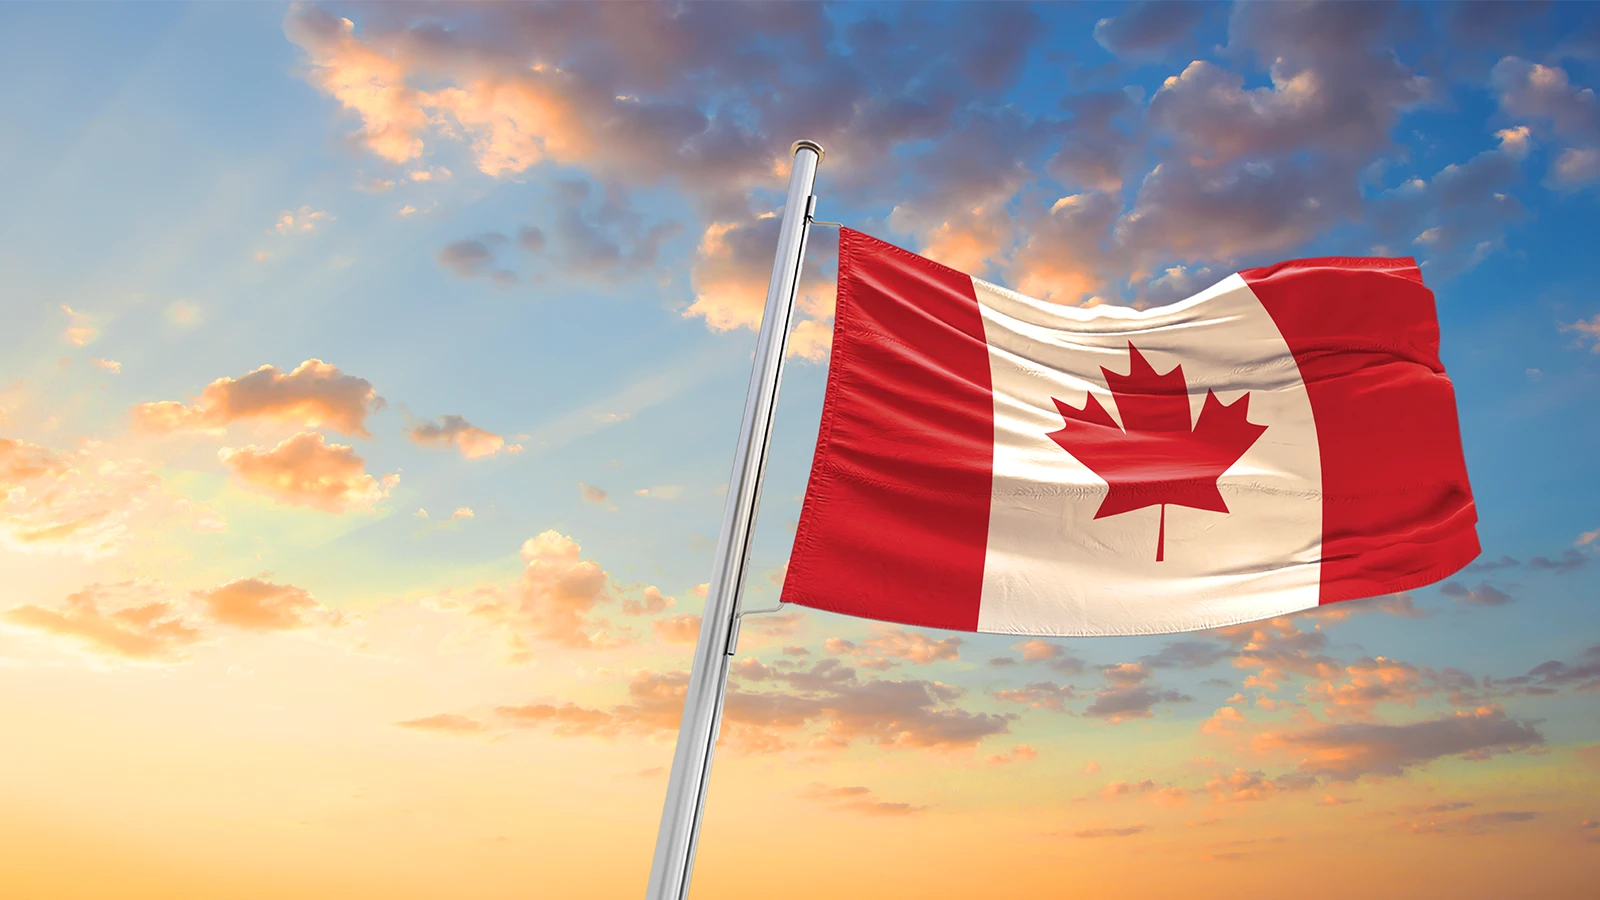 Canadian flag flying high above a blue sky